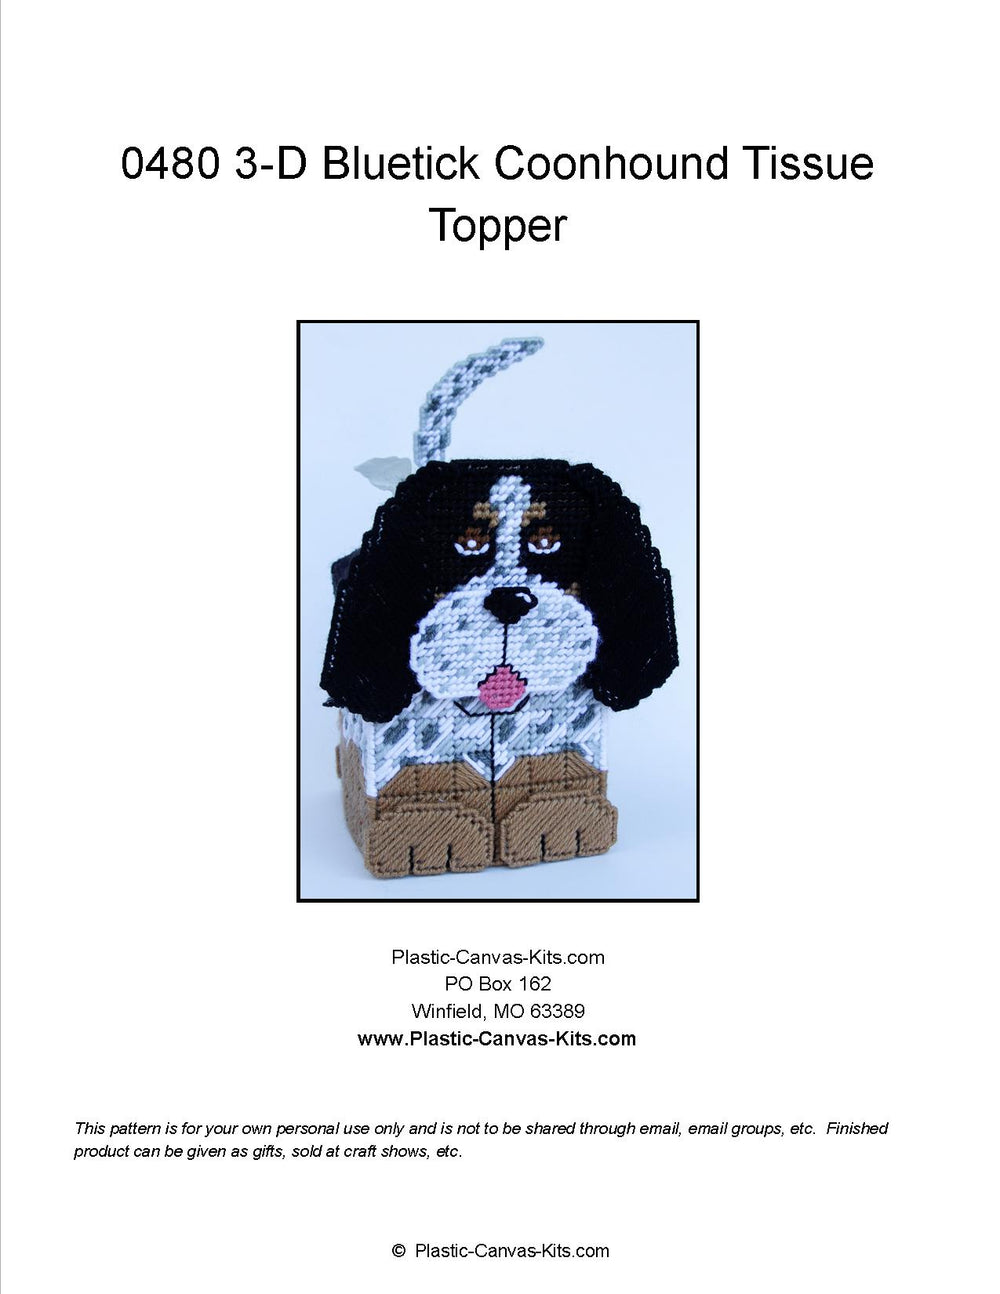 Bluetick Coonhound 3-D Tissue Topper